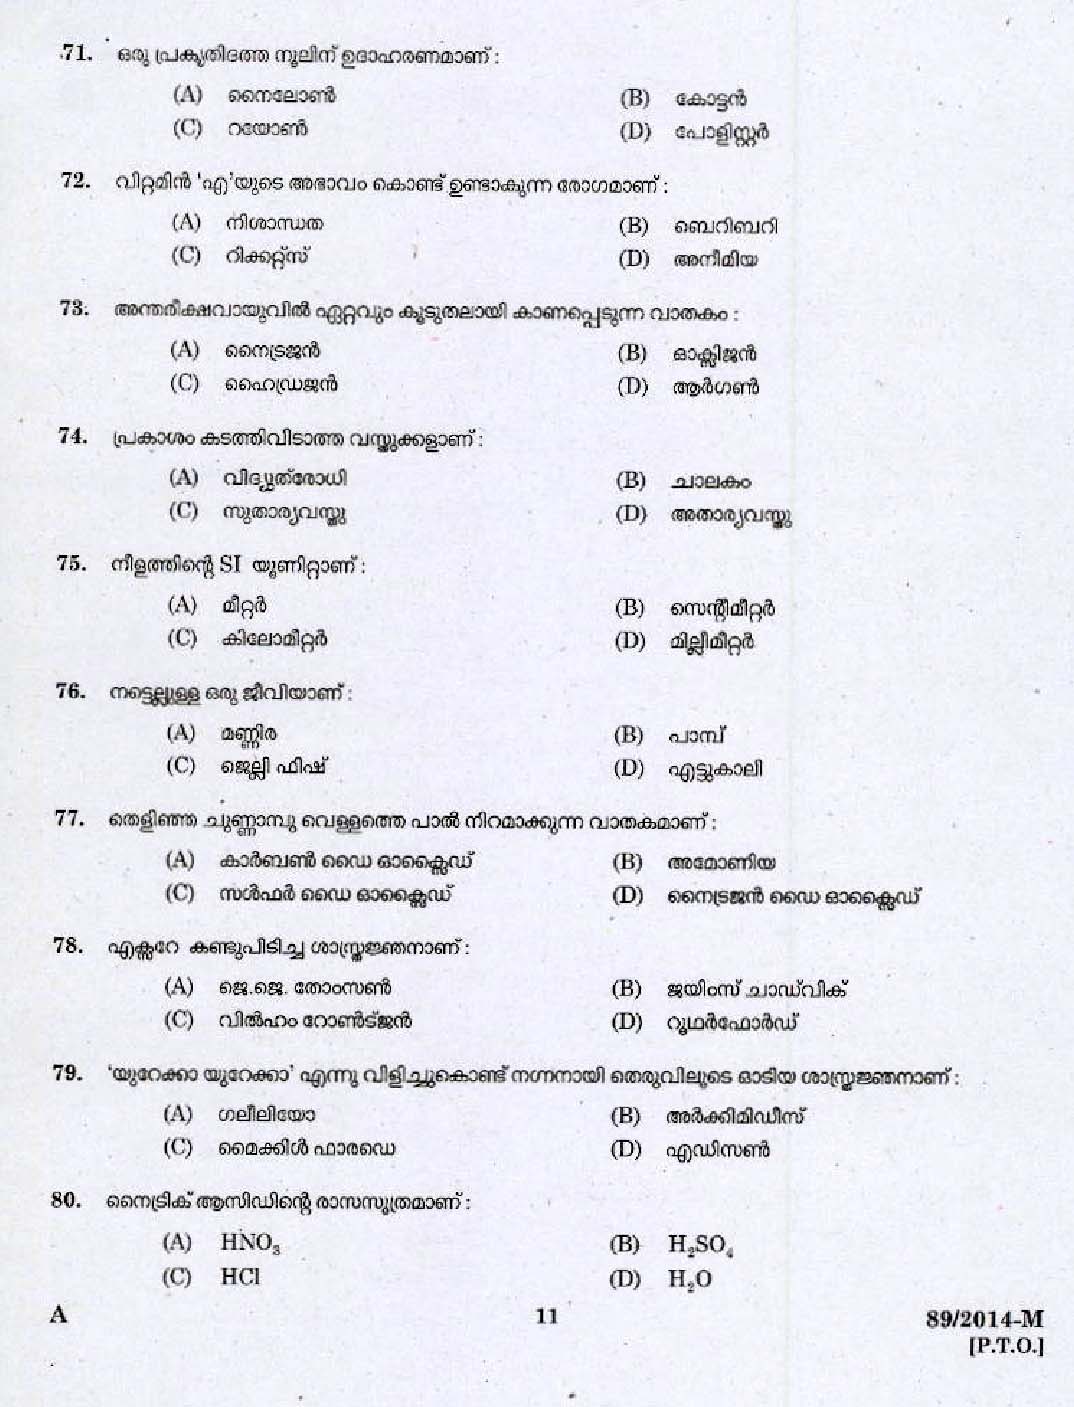 Kerala PSC Attender Exam 2014 Question Paper Code 892014 M 9